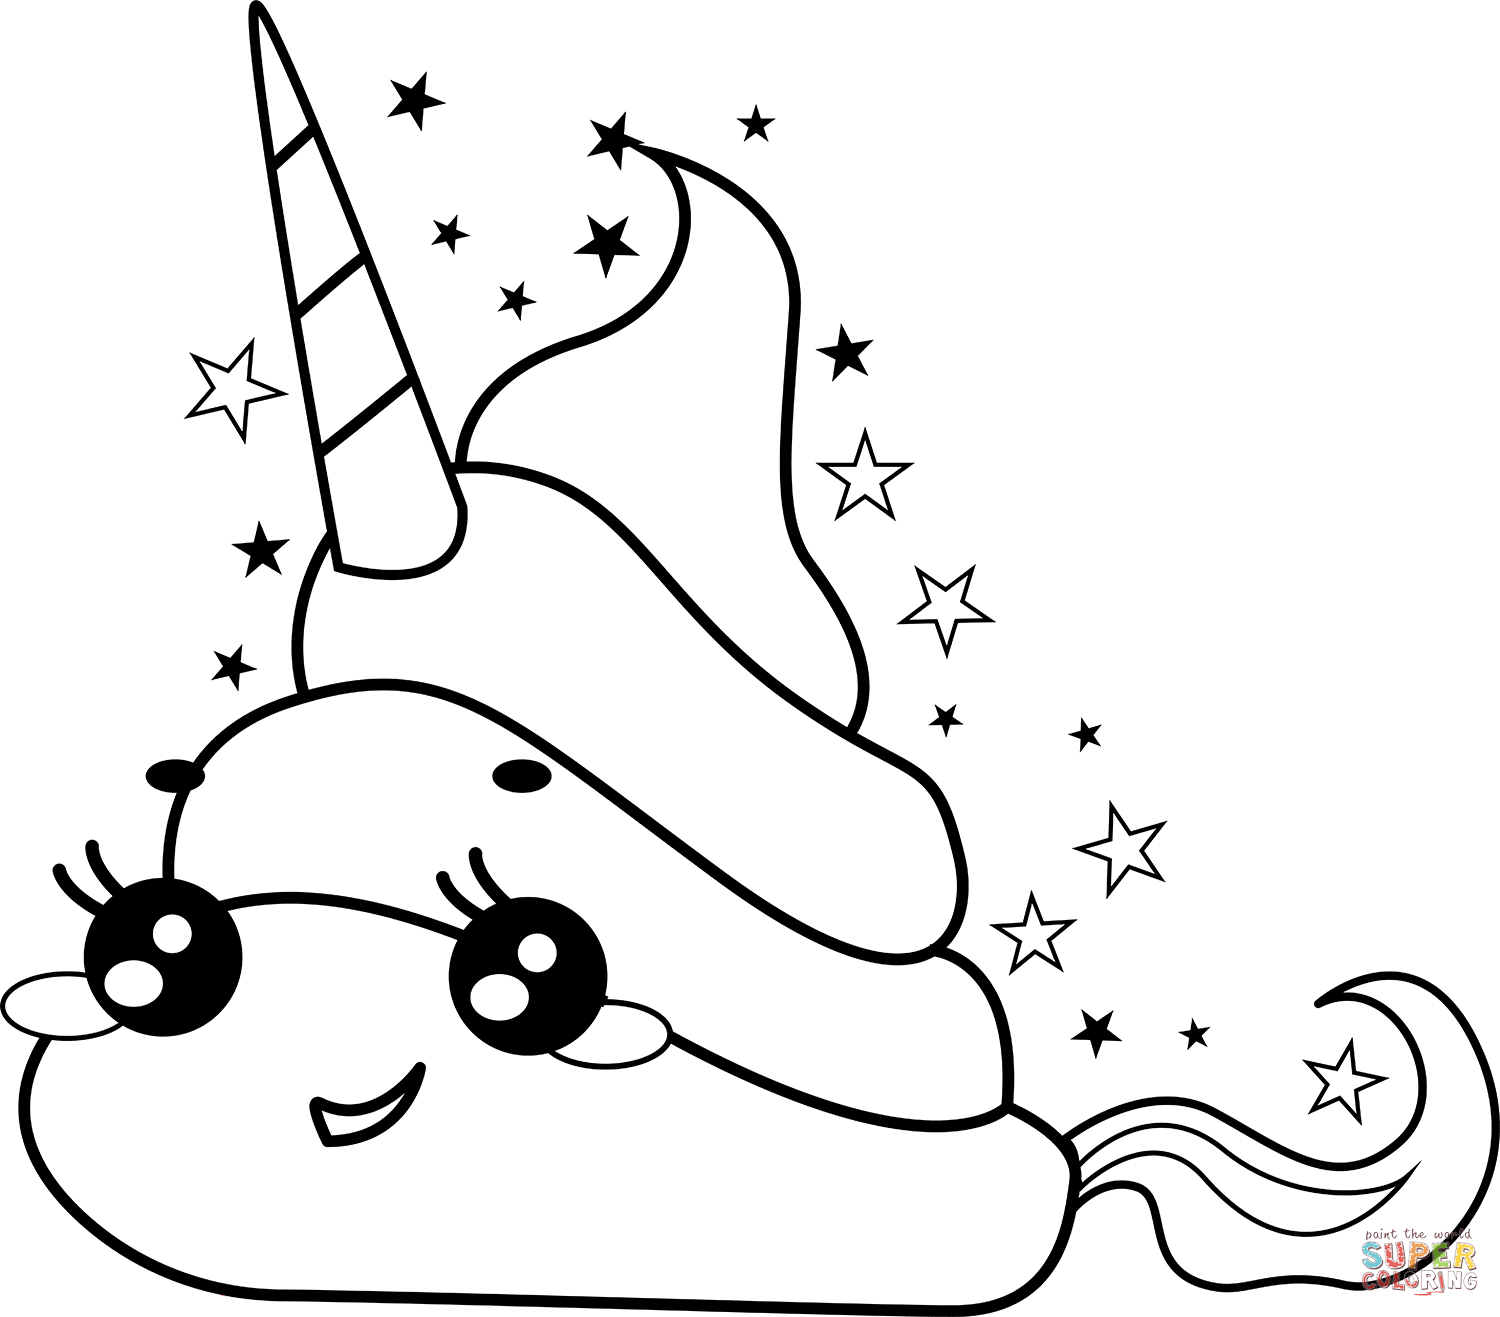 Unicorn Poop Emoji coloring page | Free Printable Coloring Pages